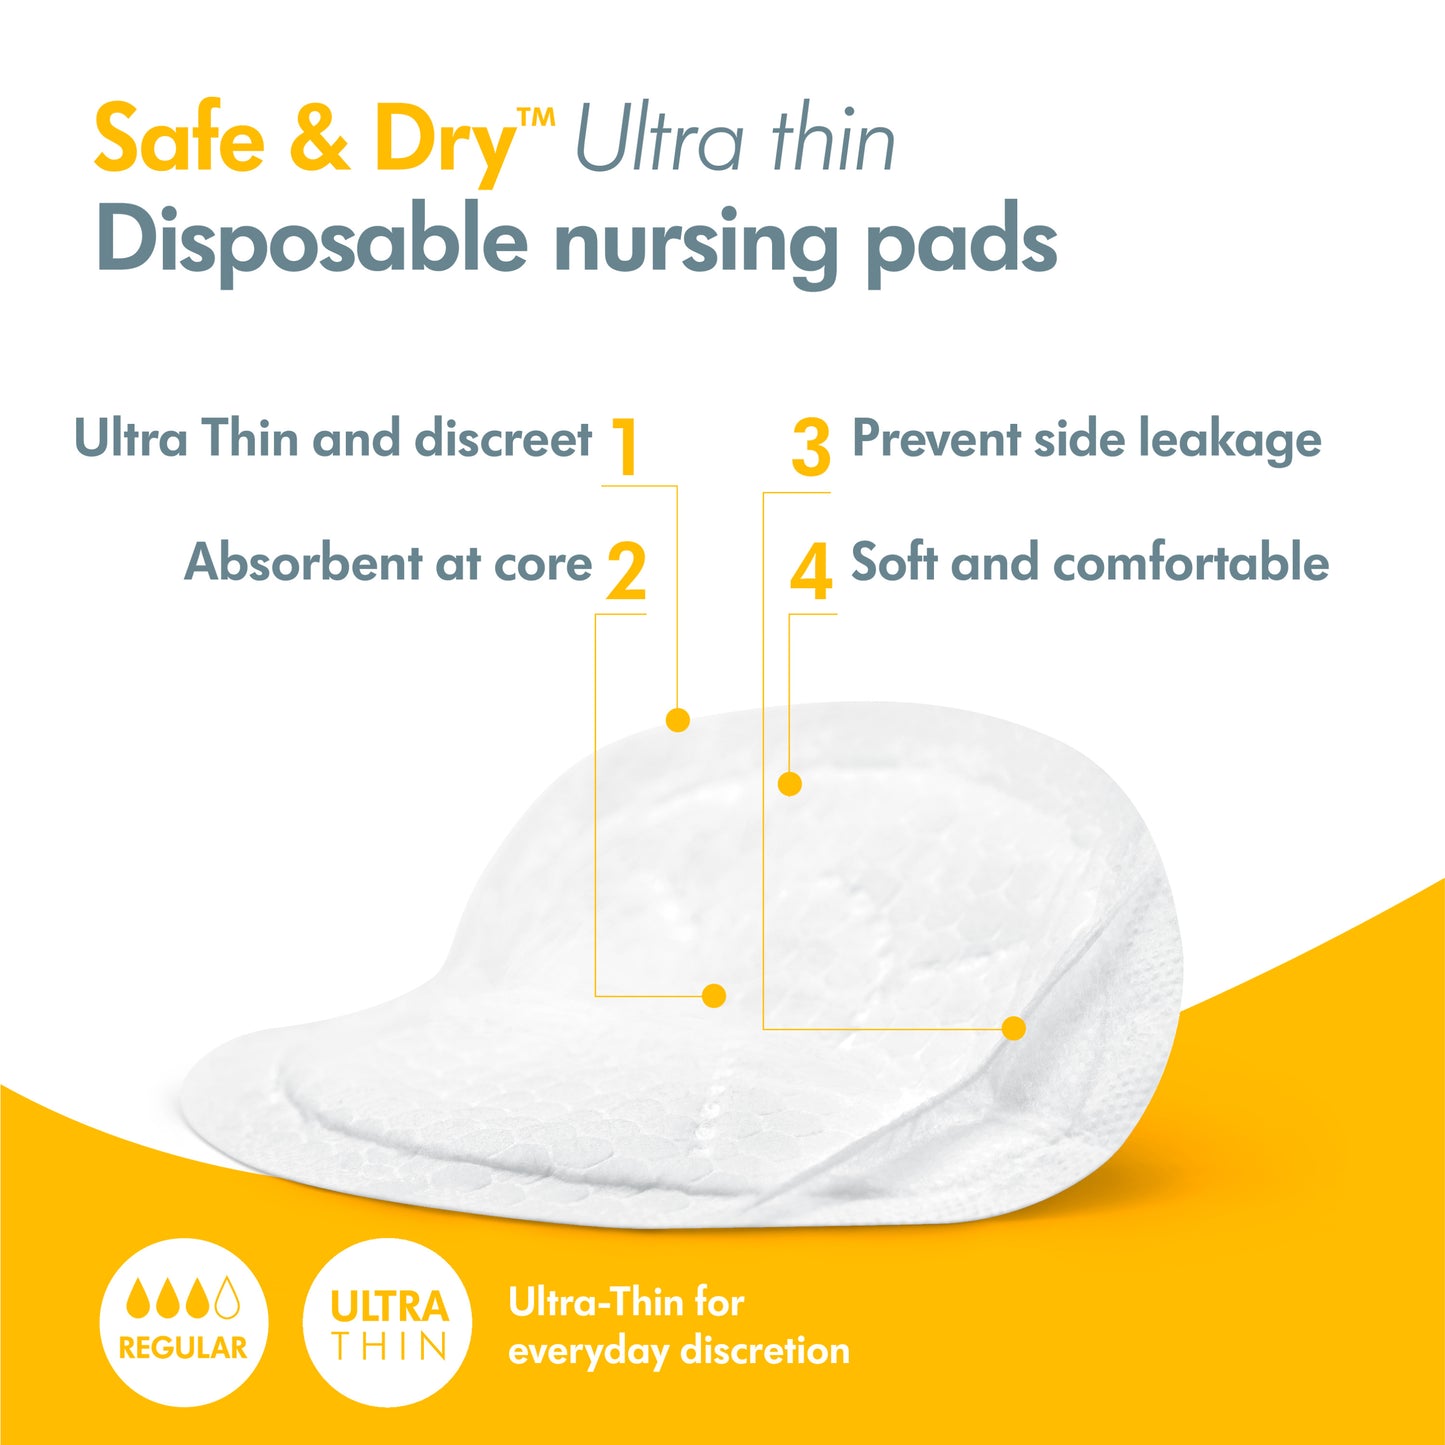 Medela Safe & Dry Ultra Thin Disposable Nursing Pads